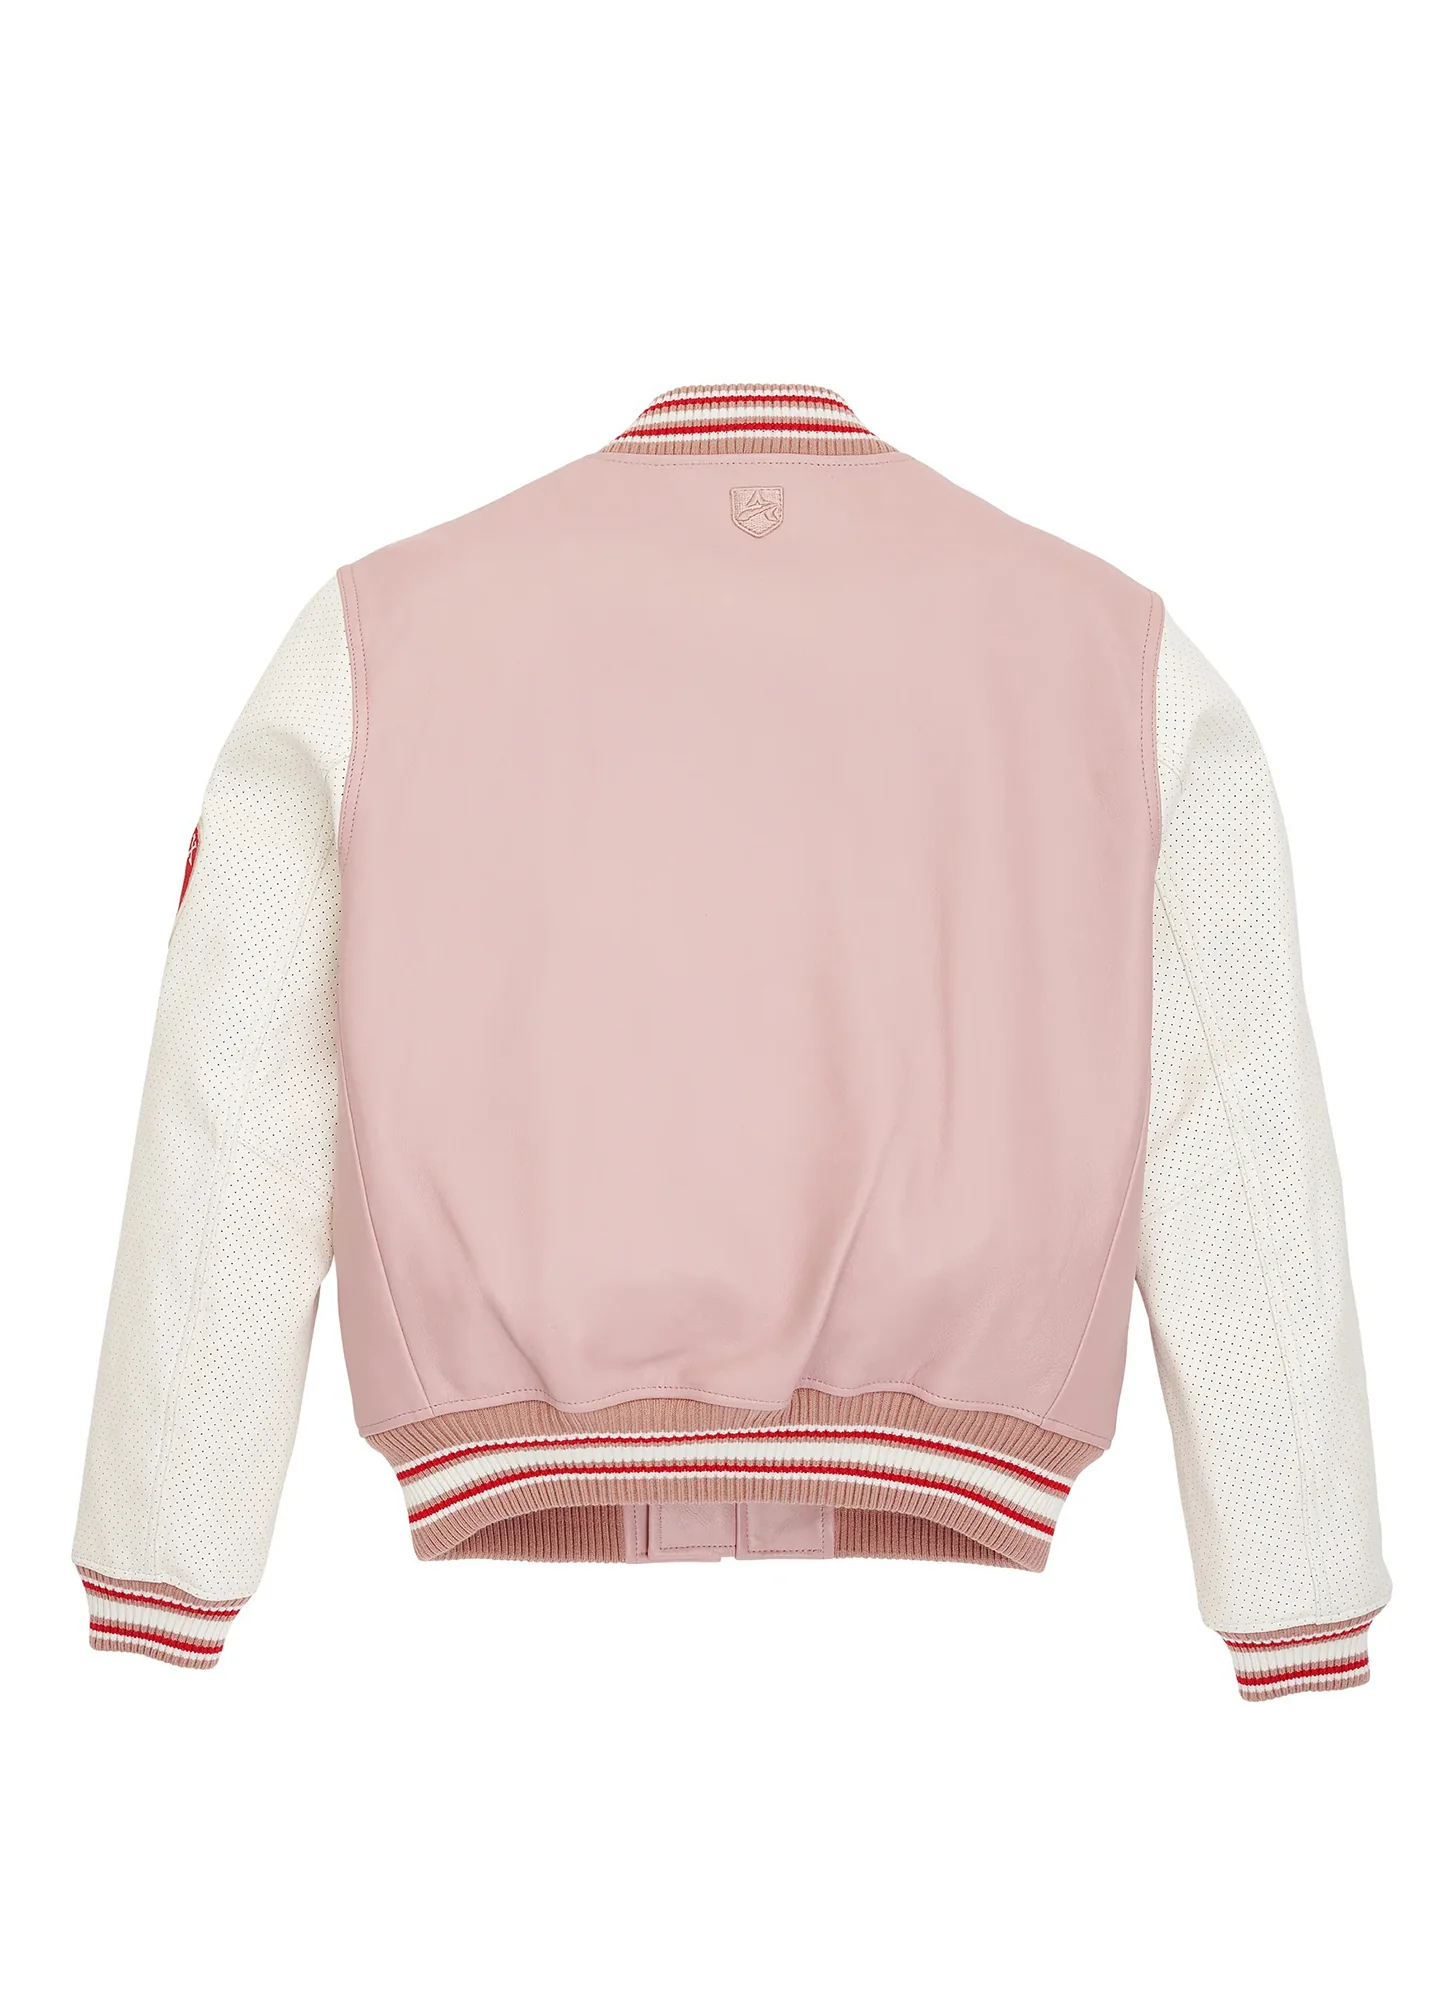 Script Light Pink And Varsity Jacket.